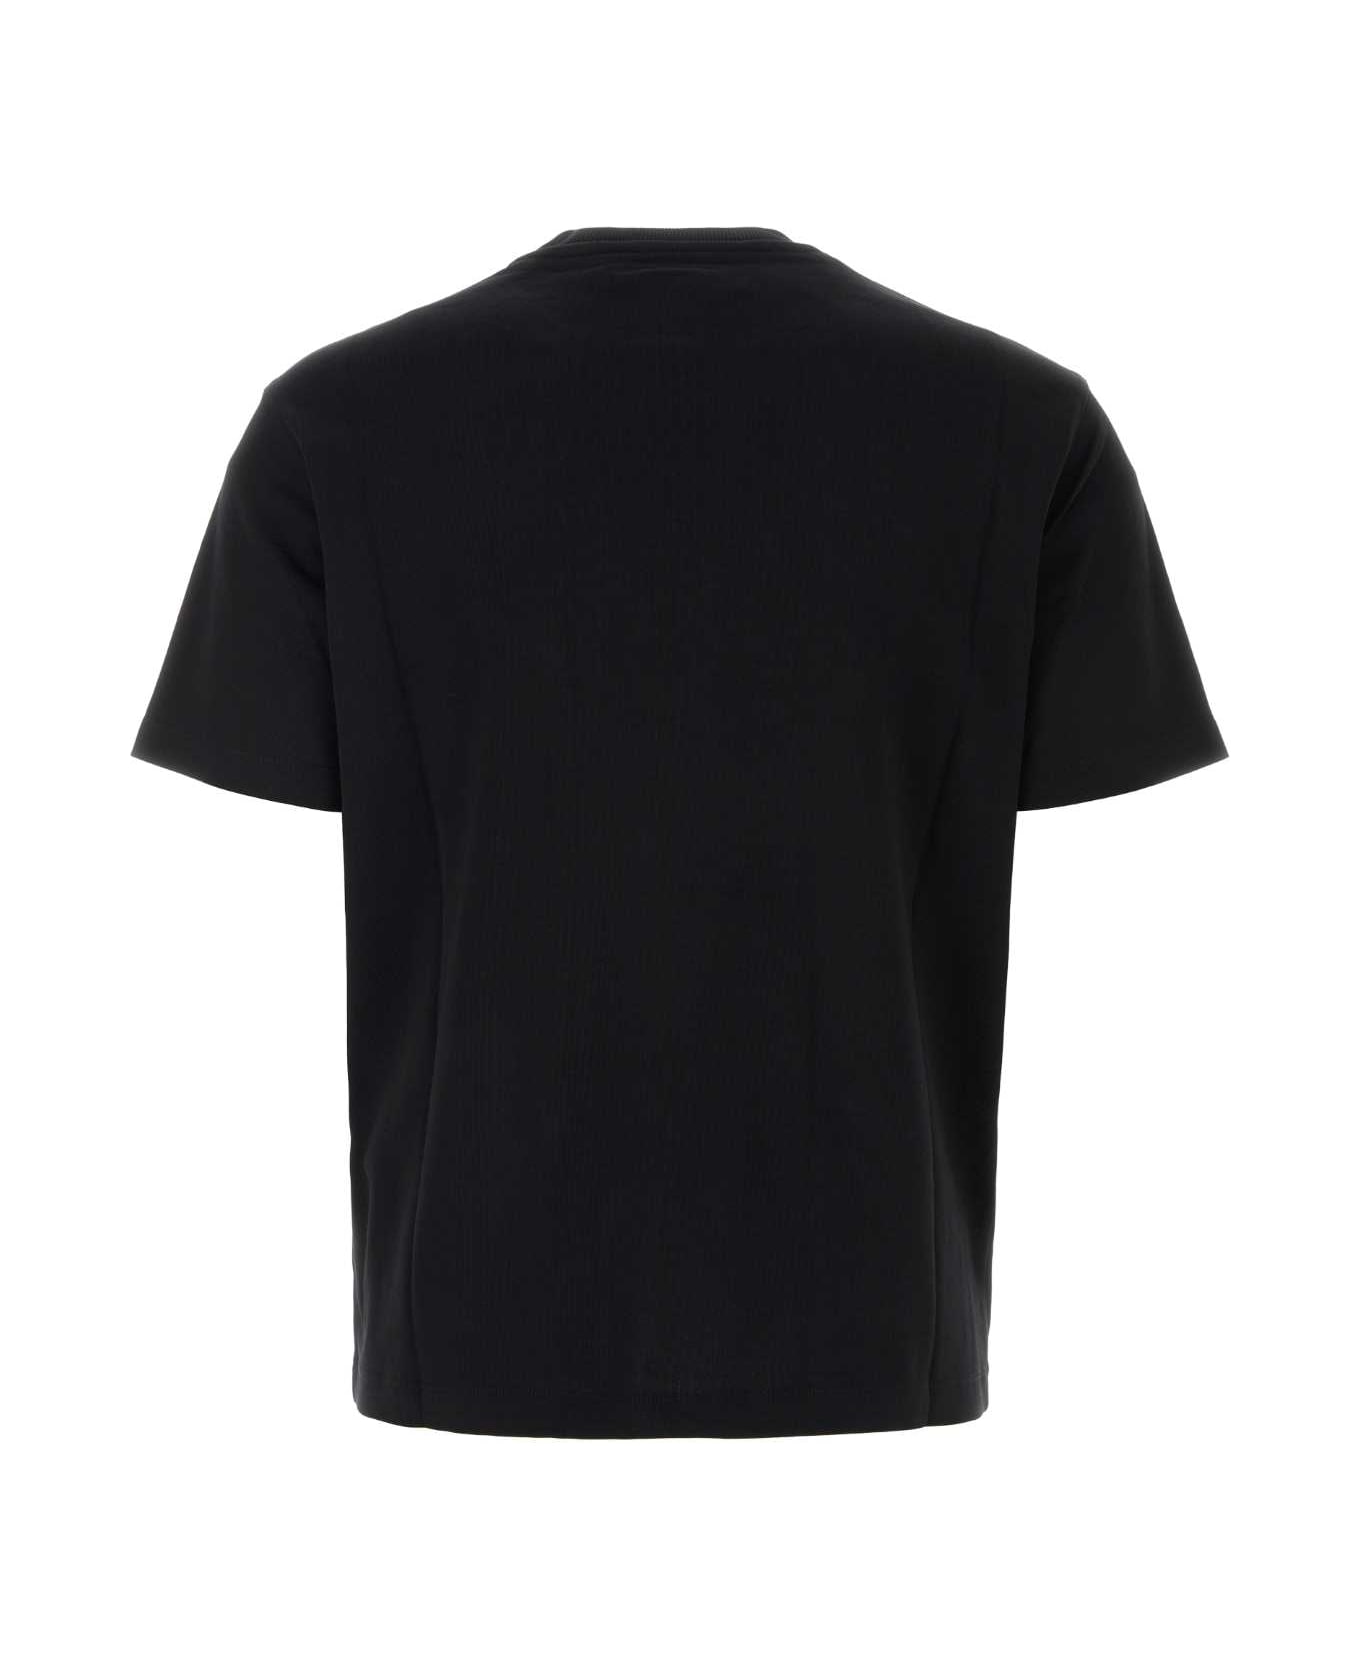 Emporio Armani Black Cotton T-shirt - 0095